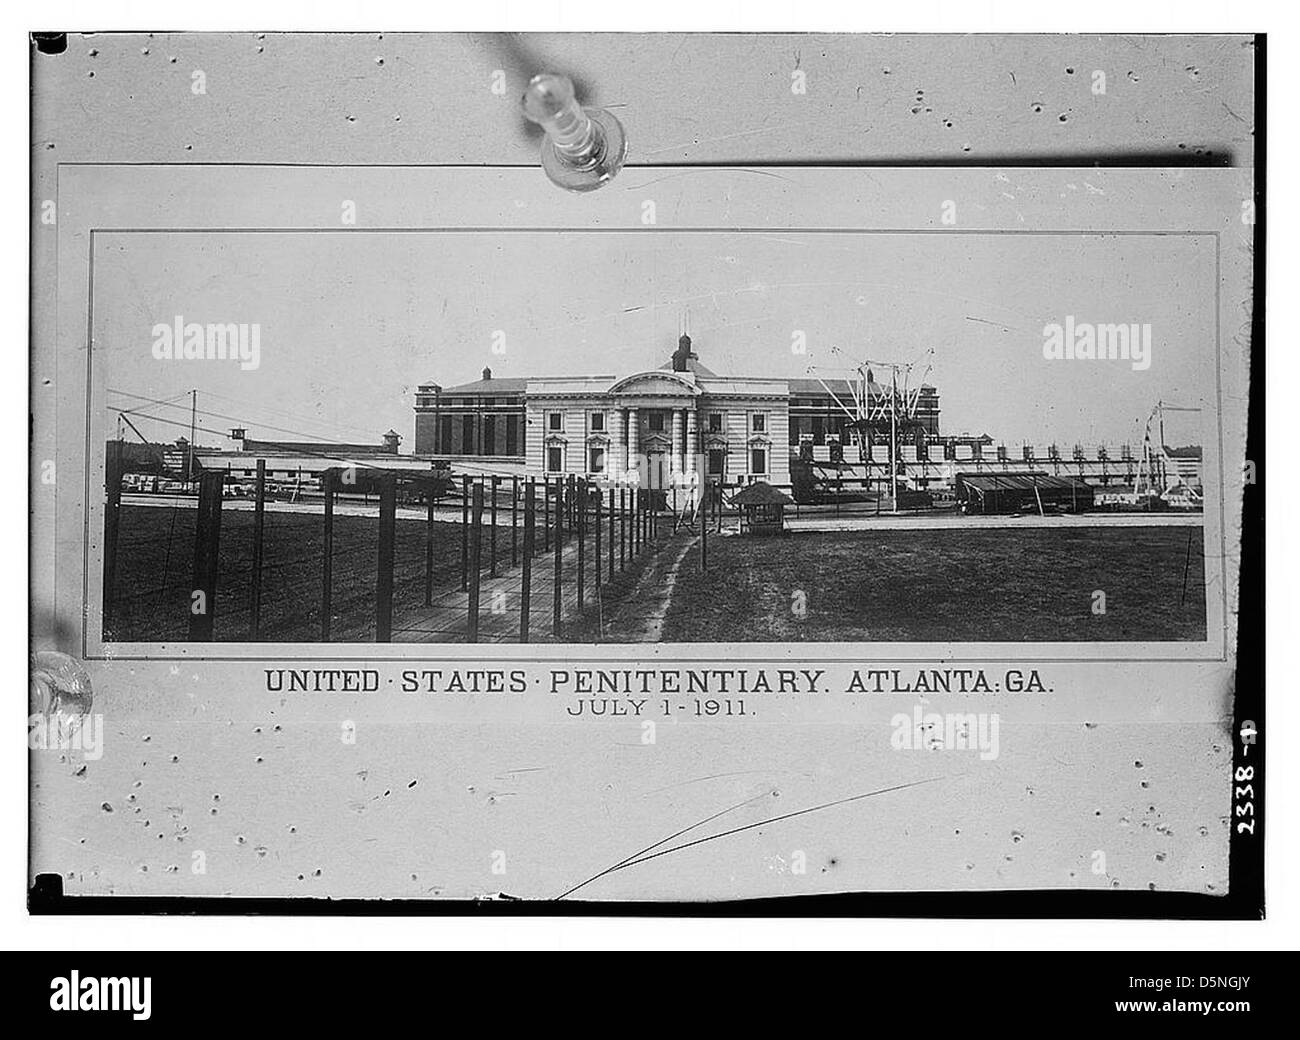 U.S. Penitentiary, Atlanta, Ga. Jul. 1, 1911 (LOC) Stock Photo